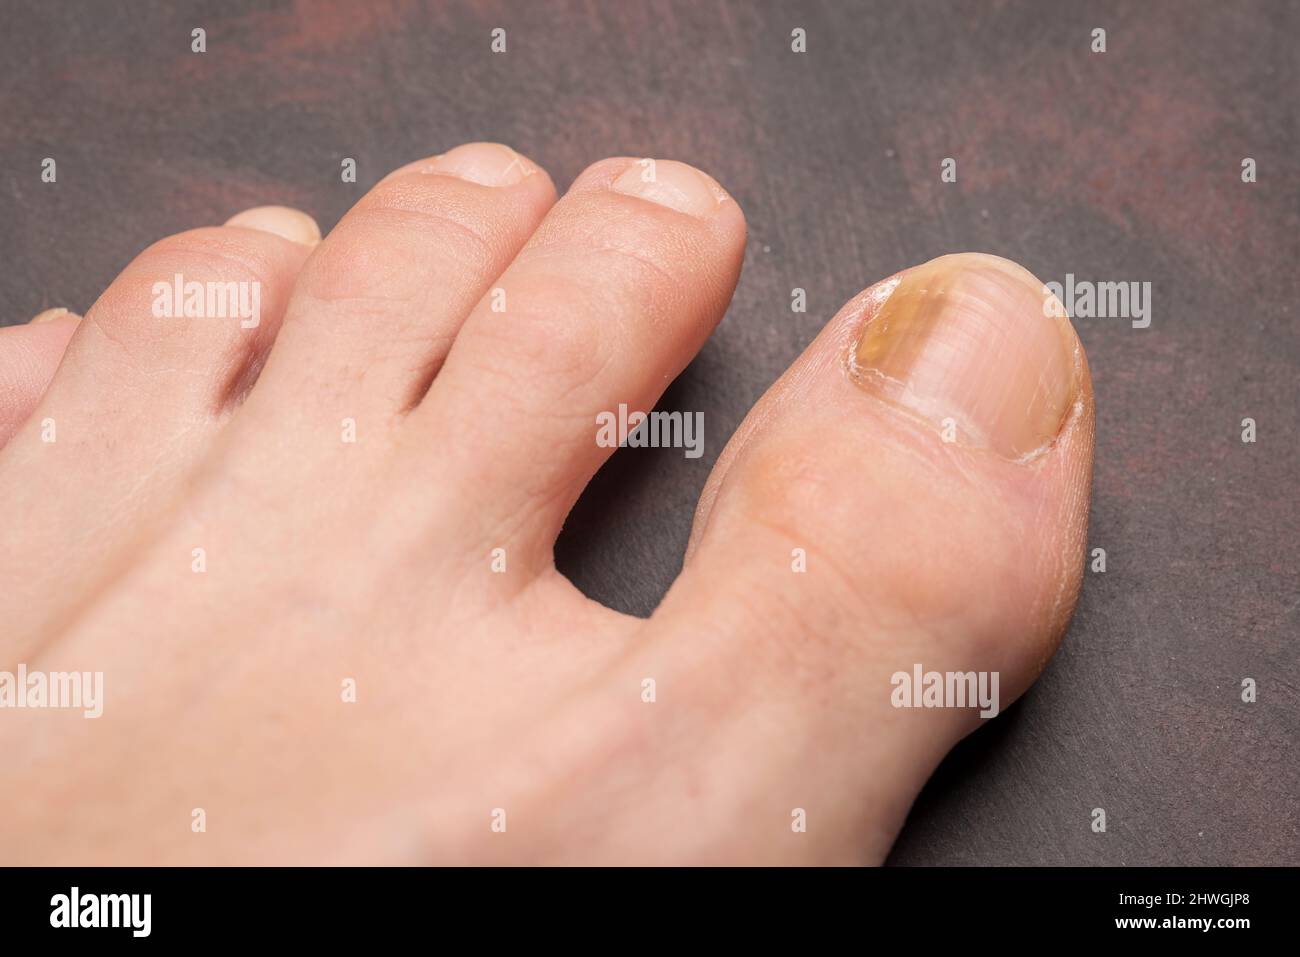 Dark spots on babies nails | BabyCenter